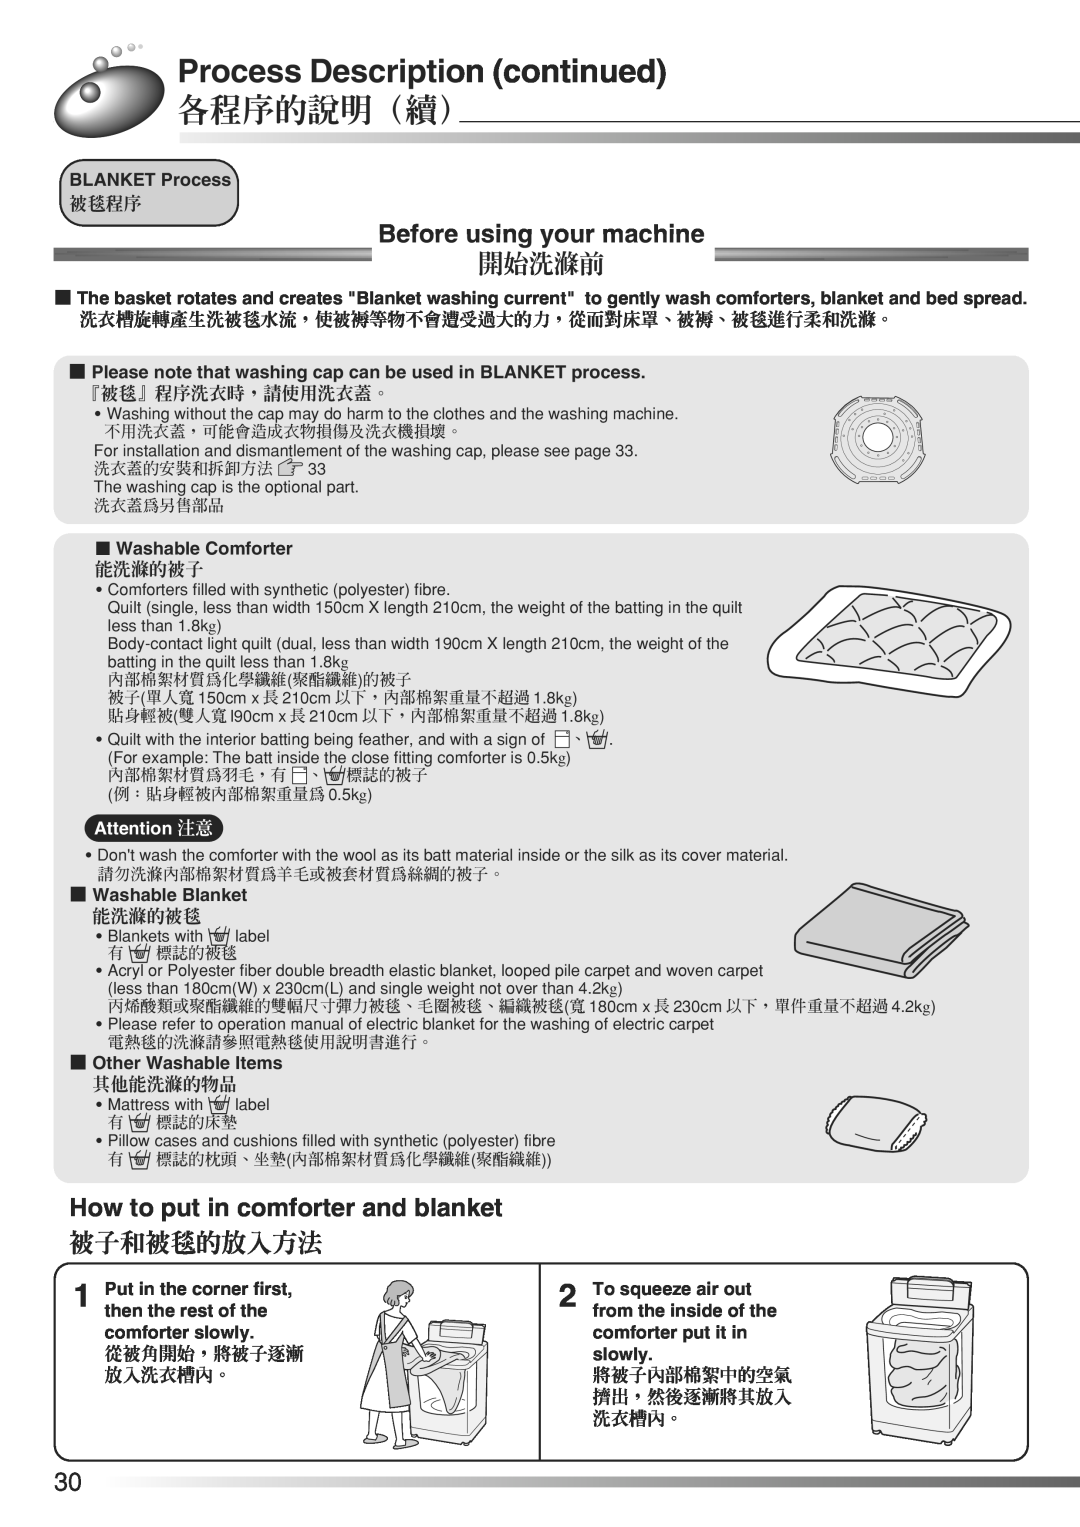 Hitachi AJ-S70KXP 開始洗滌前, How to put in comforter and blanket, 被子和被毯的放入方法, Process Description continued, 各程序的說明（續）, 被毯程序 